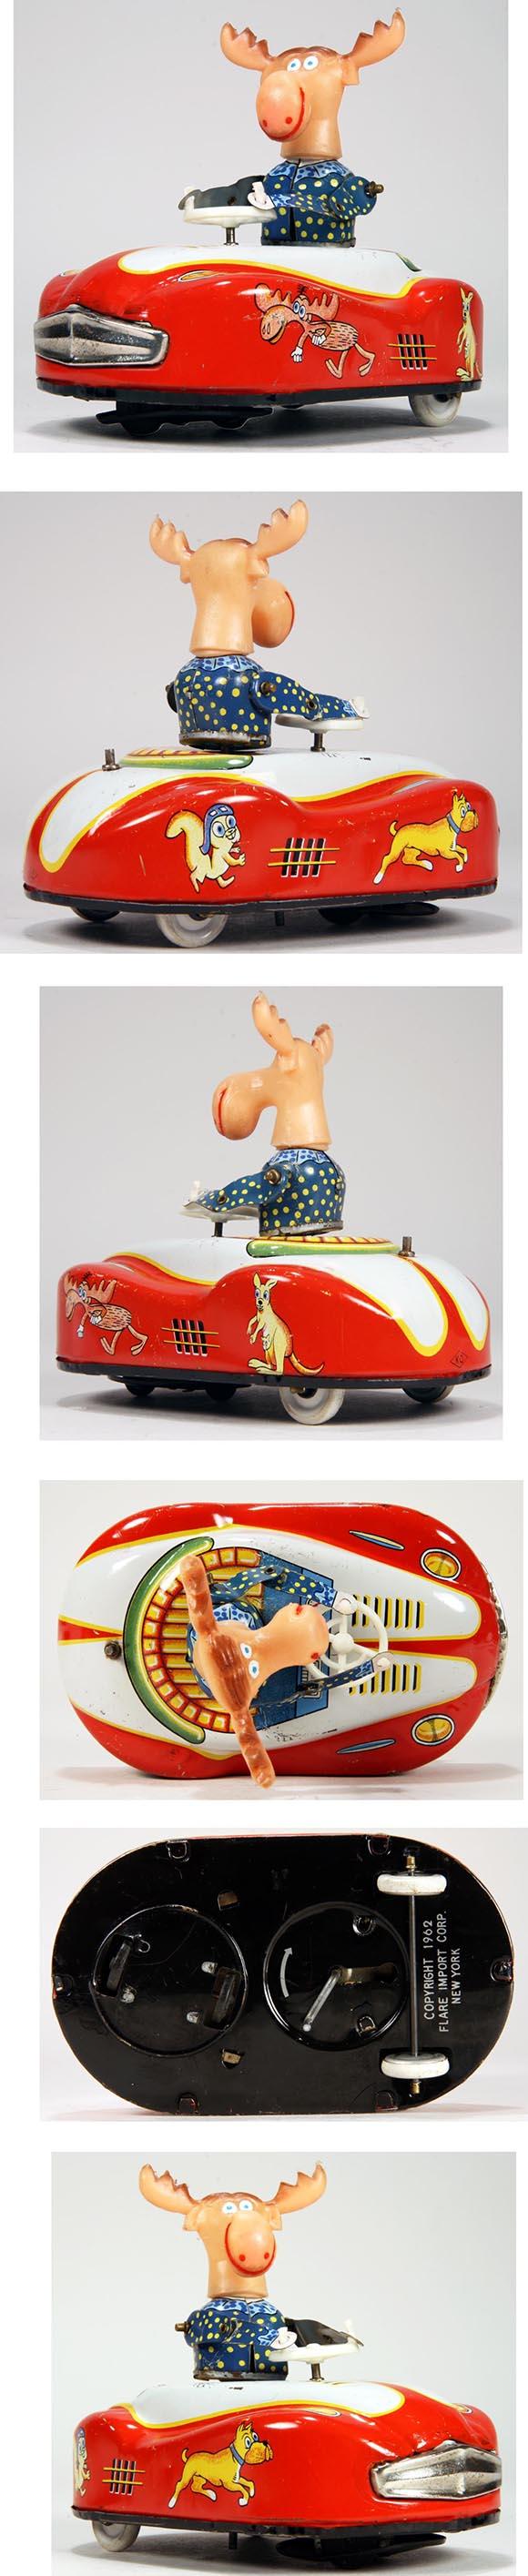 1962 Yoshiya, Mechanical Rocky and Bullwinkle Car